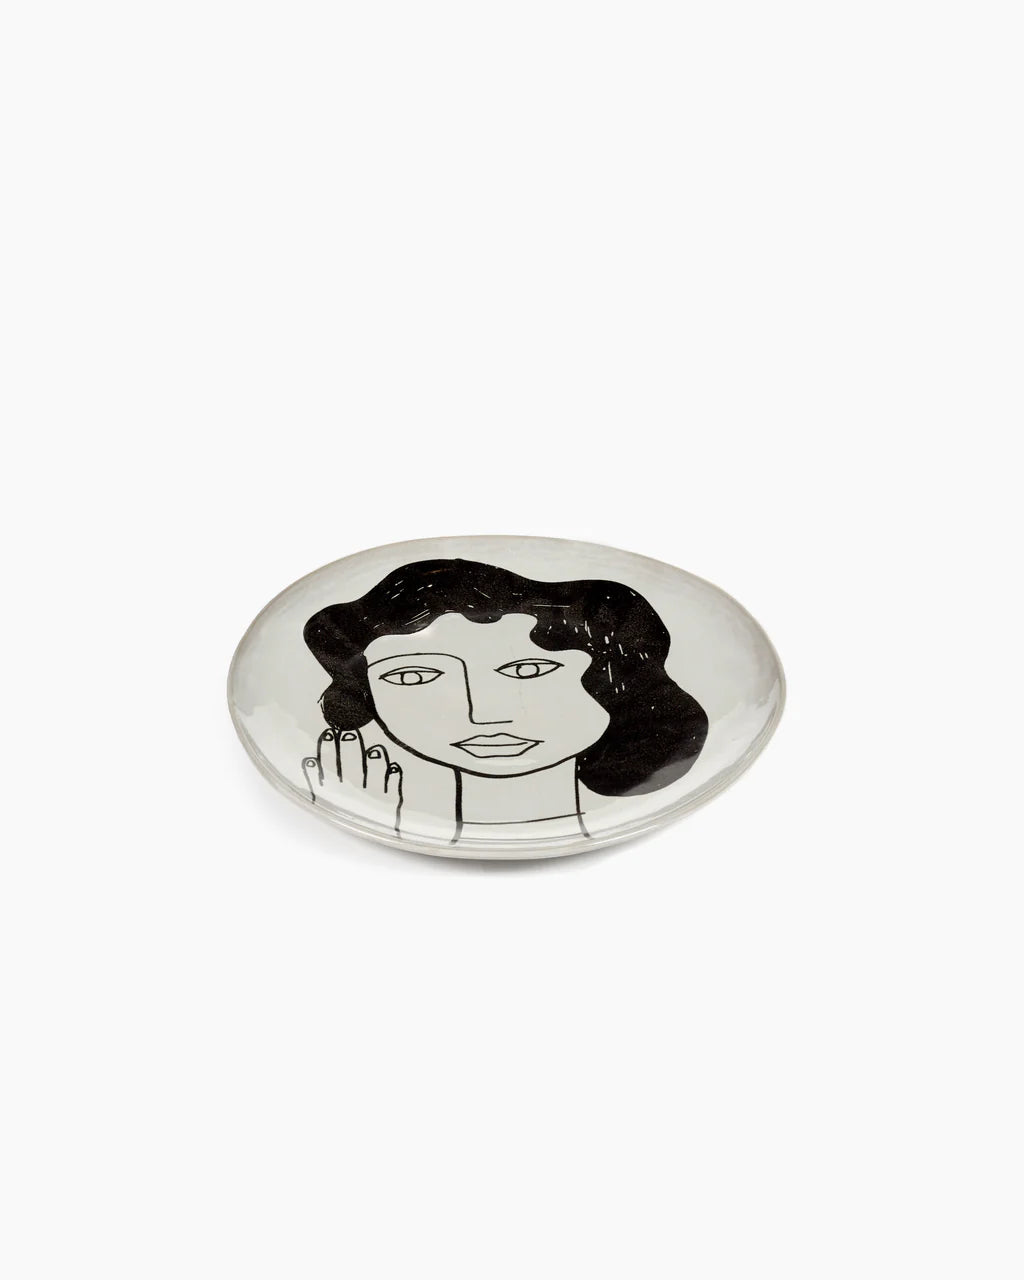 Medium Sized Plate with a Woman's Face (Ø 25cm)